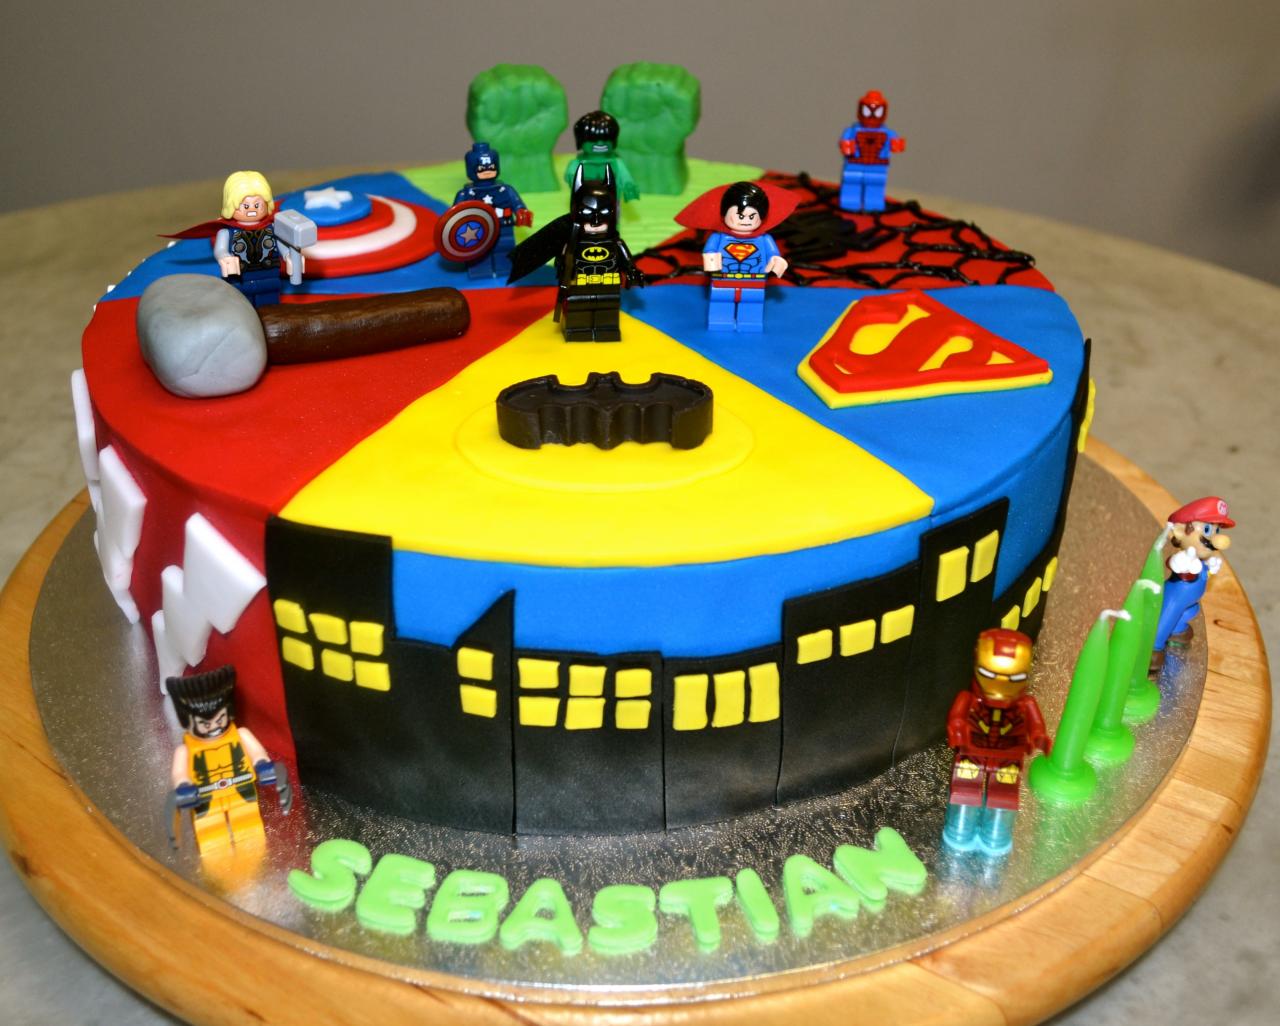 Superhero cake decorations